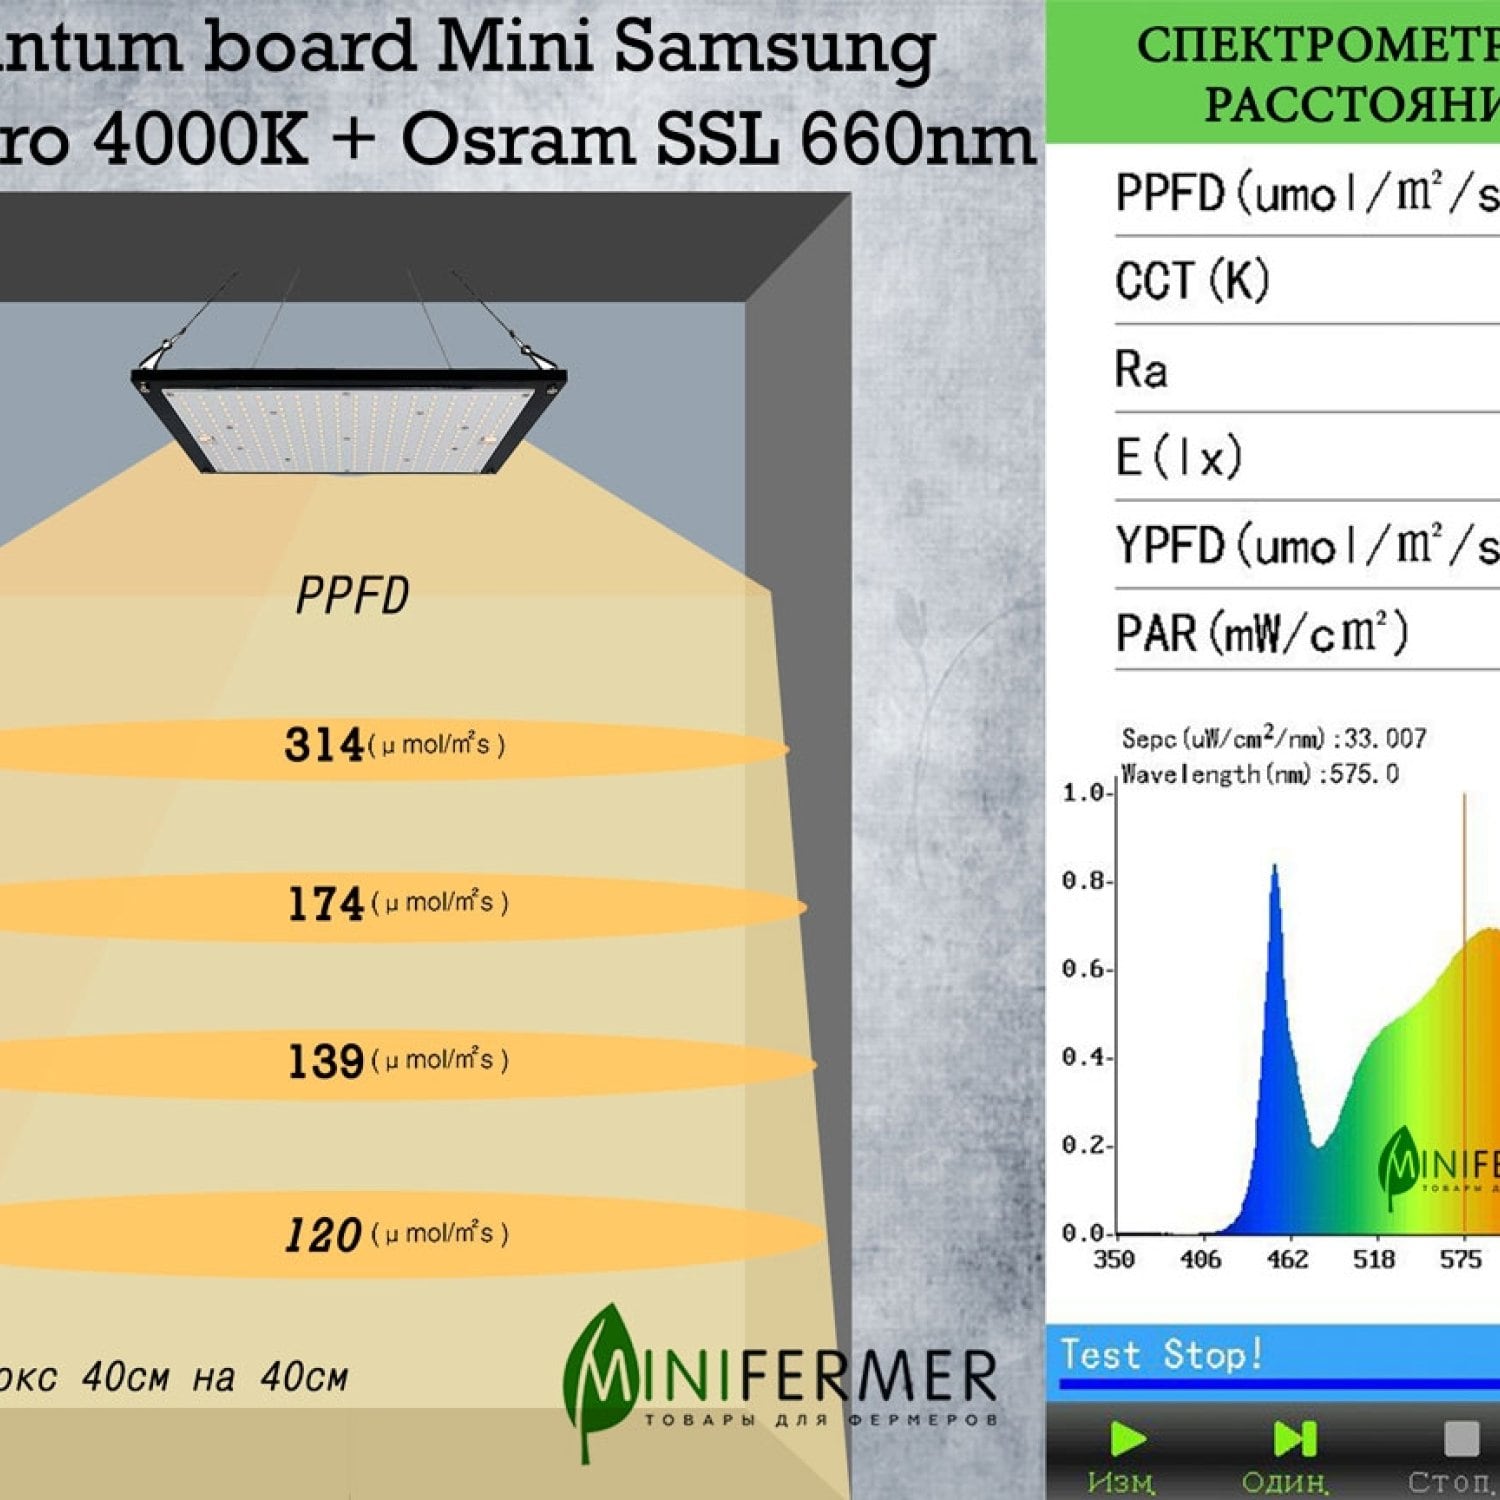 3.4 Quantum board Mini Samsung lm281b+pro 4000K + Osram GH CSSRM3.24 OSLON® Square Hyper Red 660nm